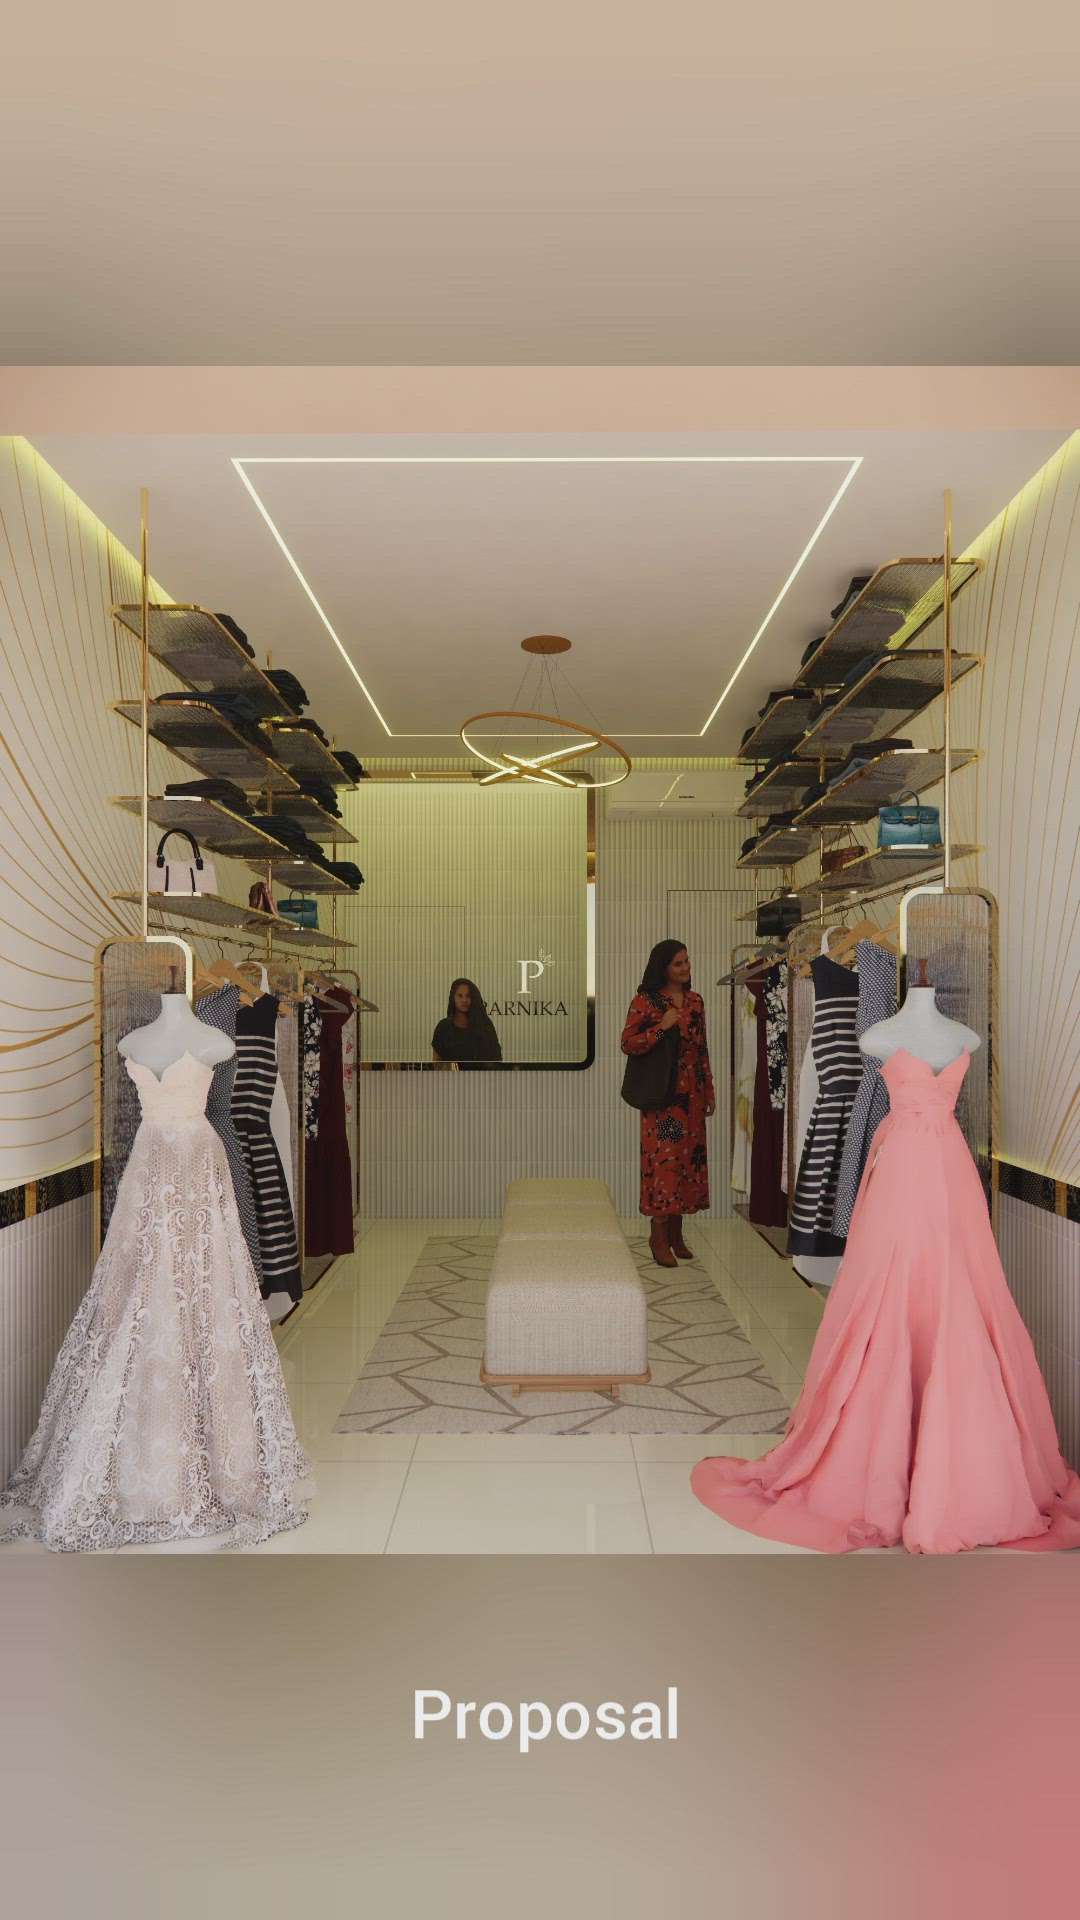 PARNIKA_boutique project completed.#interiordesignkerala #boutiqueinterior #ladiesstore #boutique #shopinterior